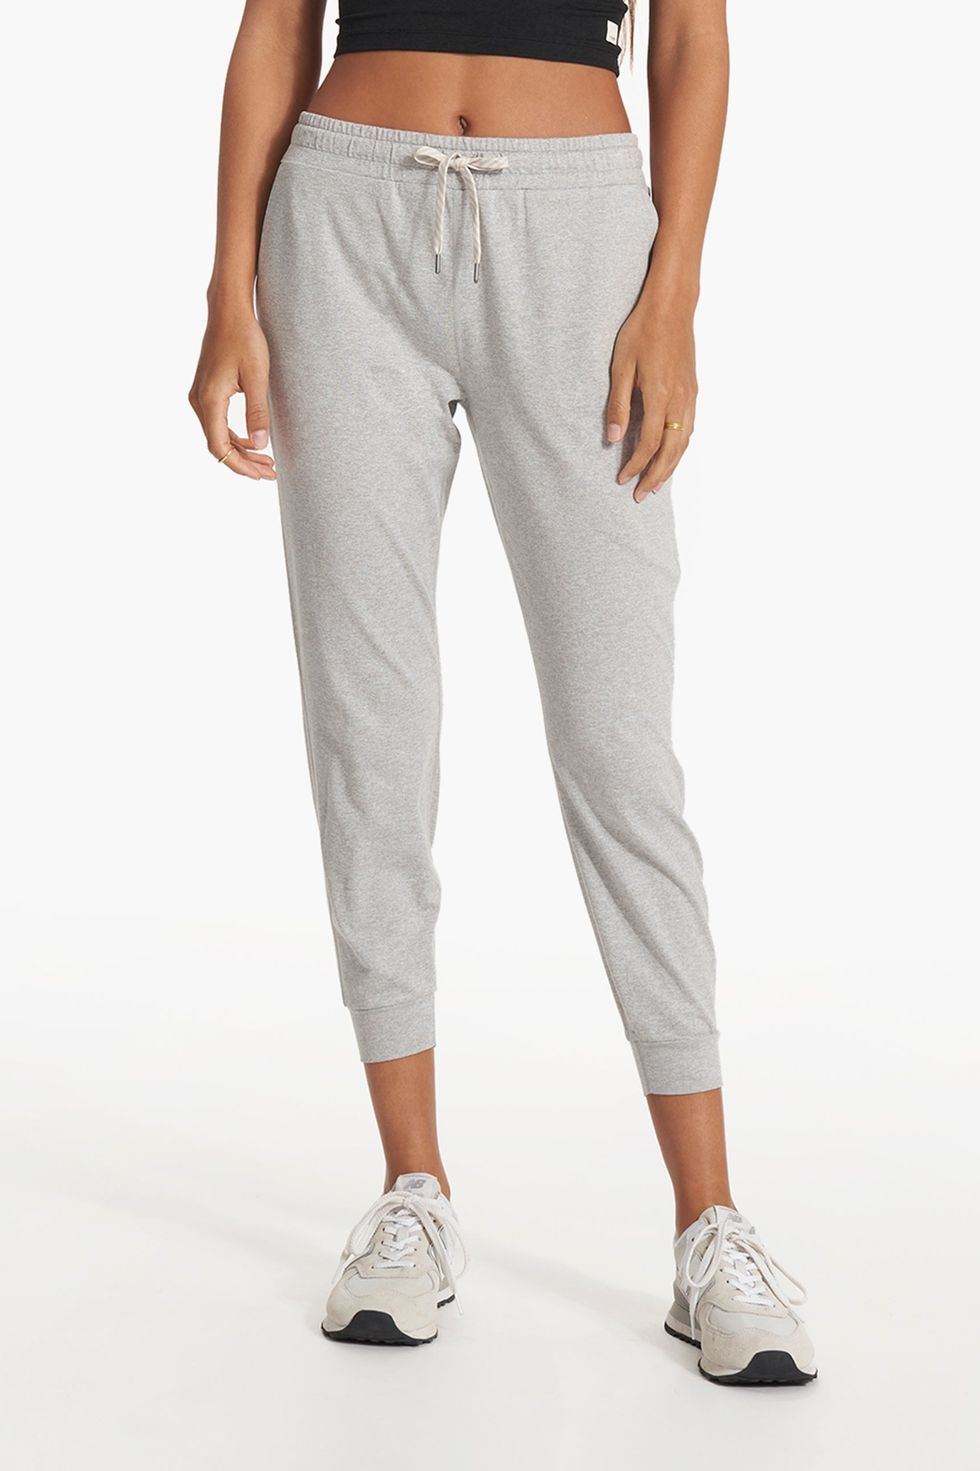 Lou & Grey Sweatpants and Sweatshirt Review